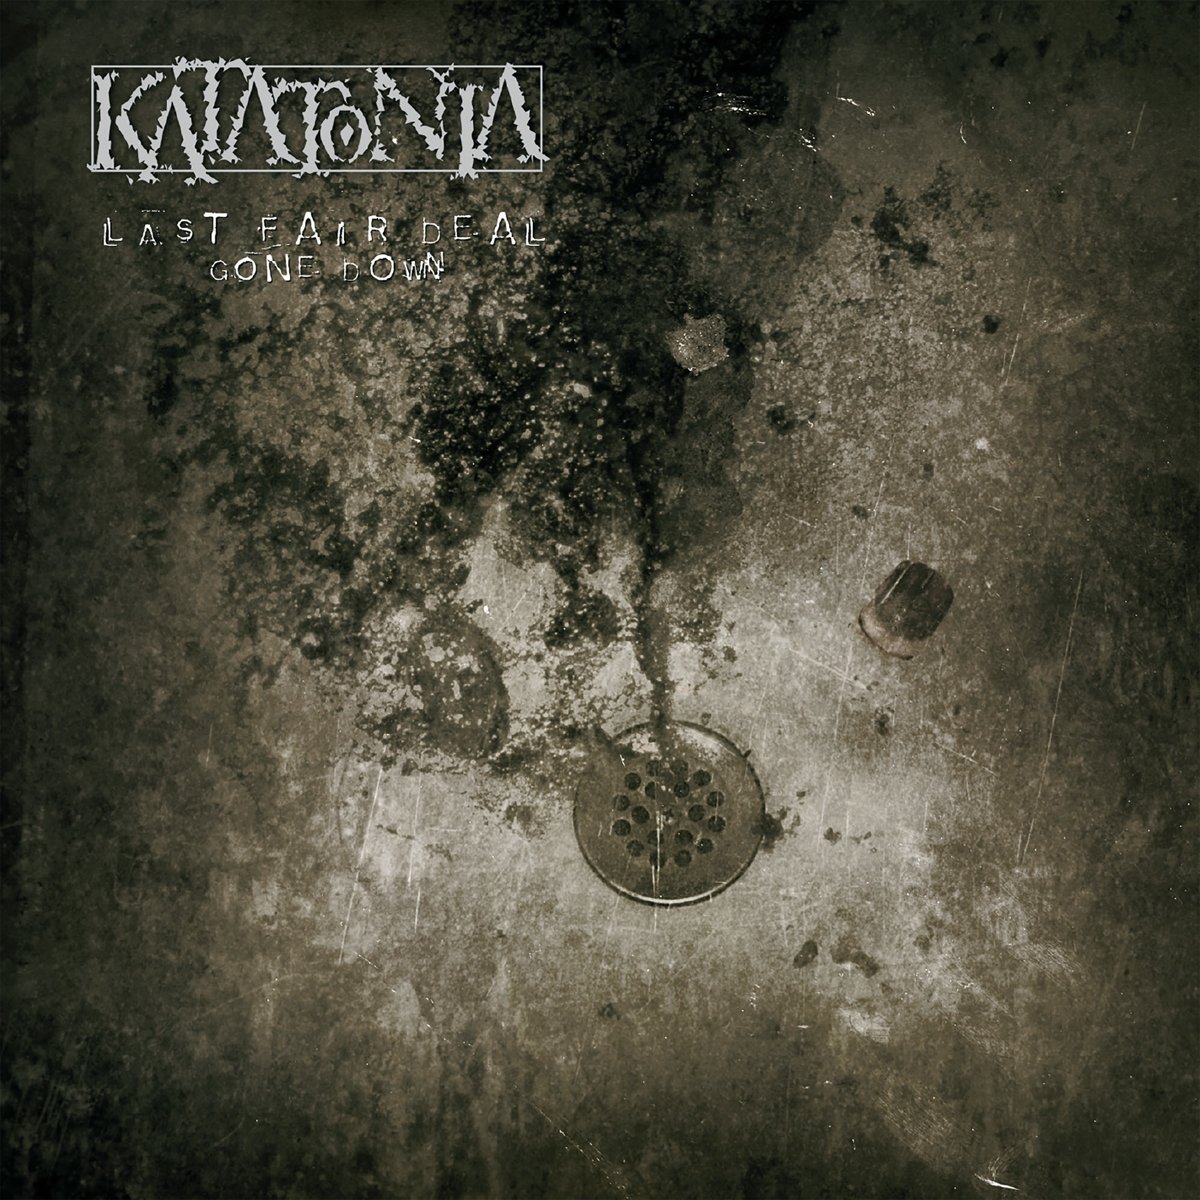 Last Fair Day Gone Night (CD + DVD) | Katatonia